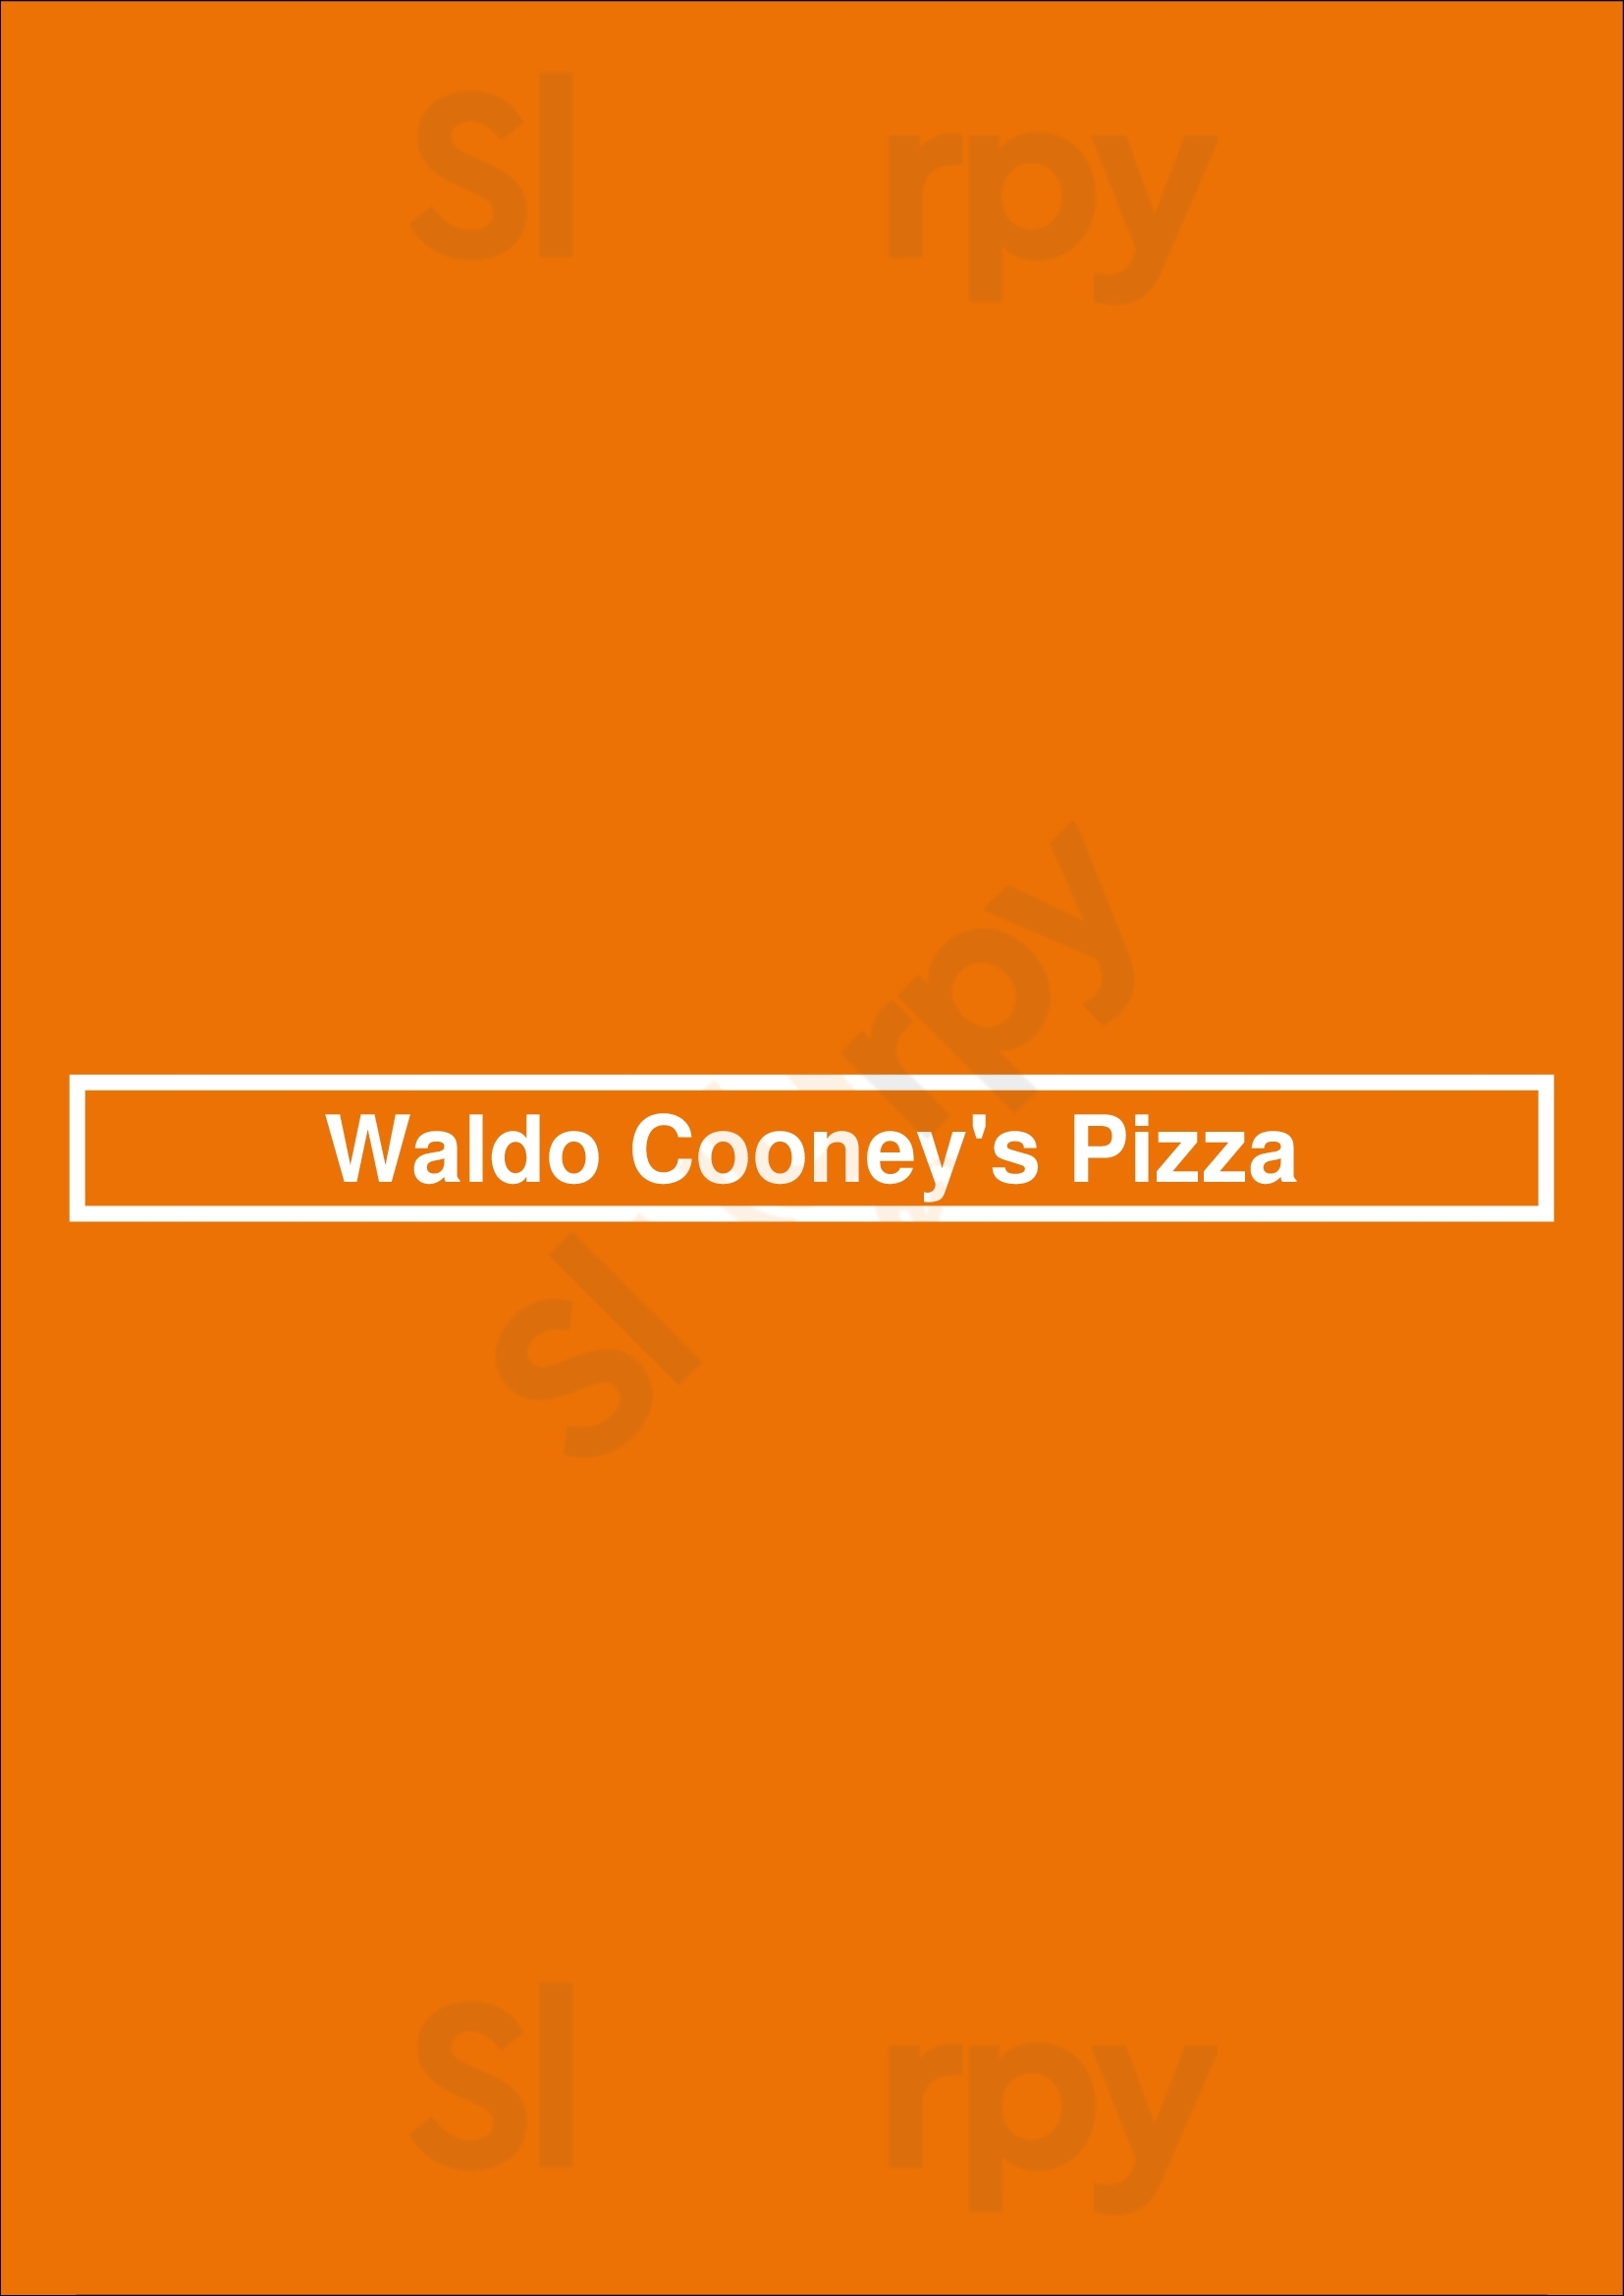 Waldo Cooney's Pizza Chicago Menu - 1